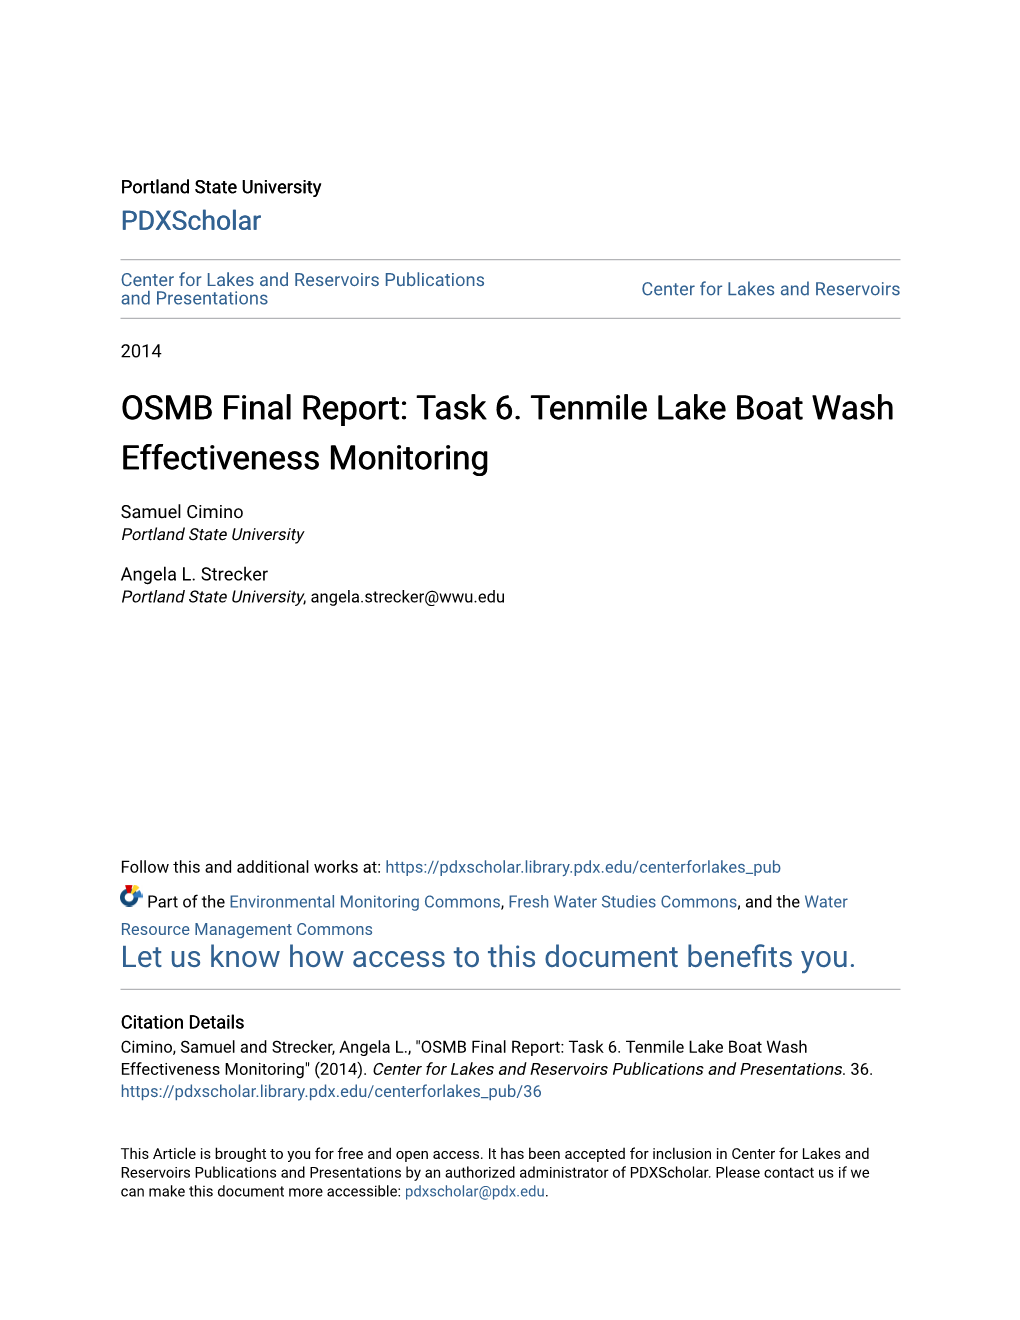 Task 6. Tenmile Lake Boat Wash Effectiveness Monitoring